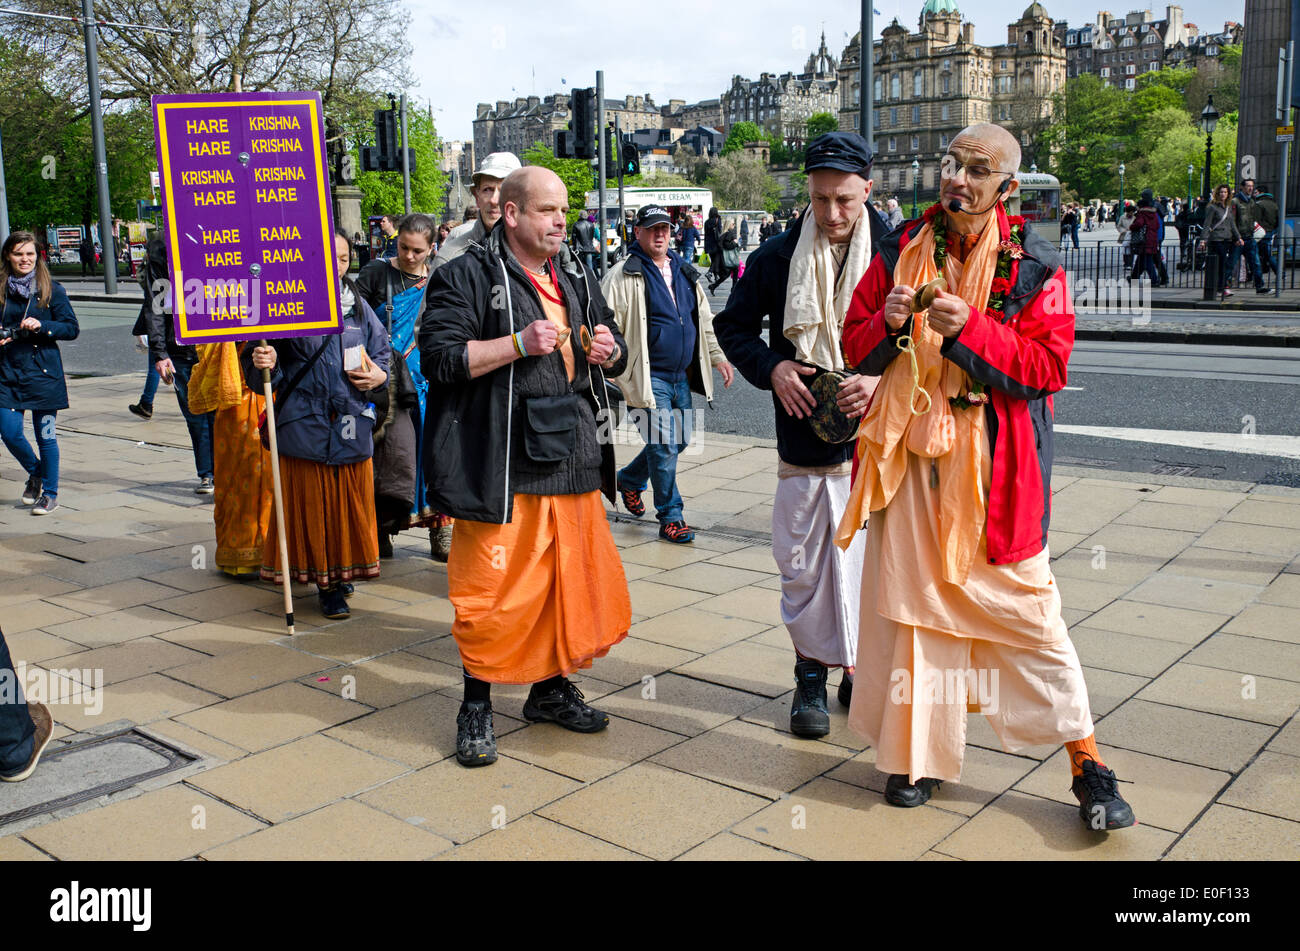 Members of the Hare Krishna movement chant as they make their way along Princes street in Edinburgh, Scotland, UK. Stock Photo